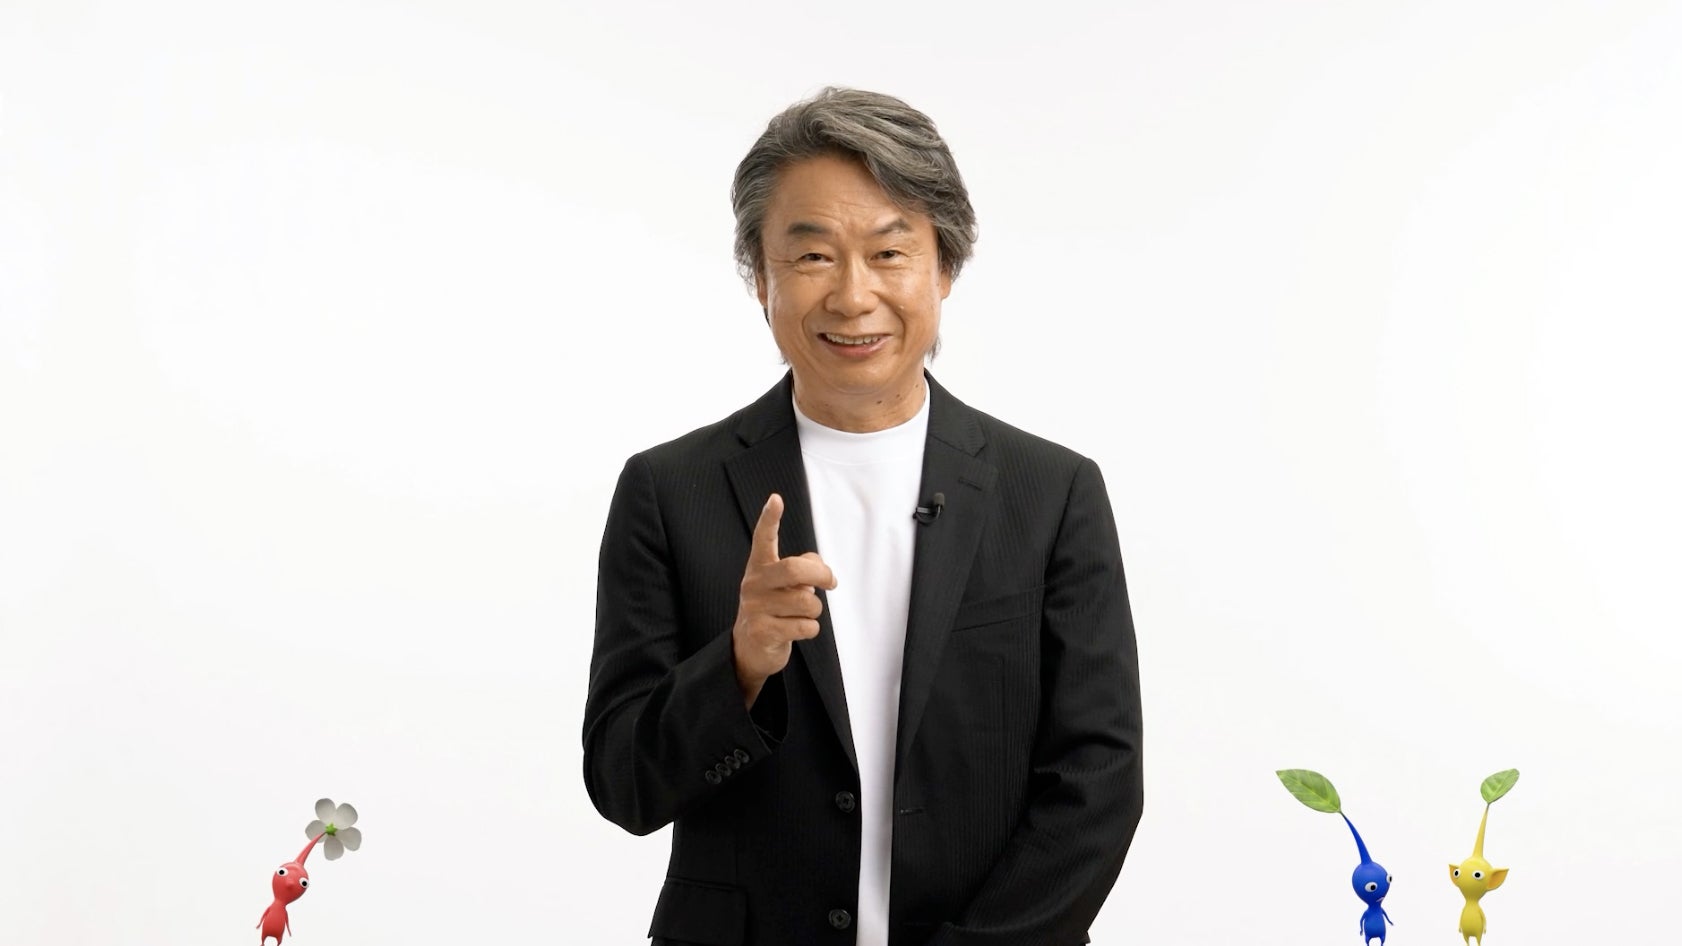 Nintendo, design, and Apple partnership with Shigeru Miyamoto